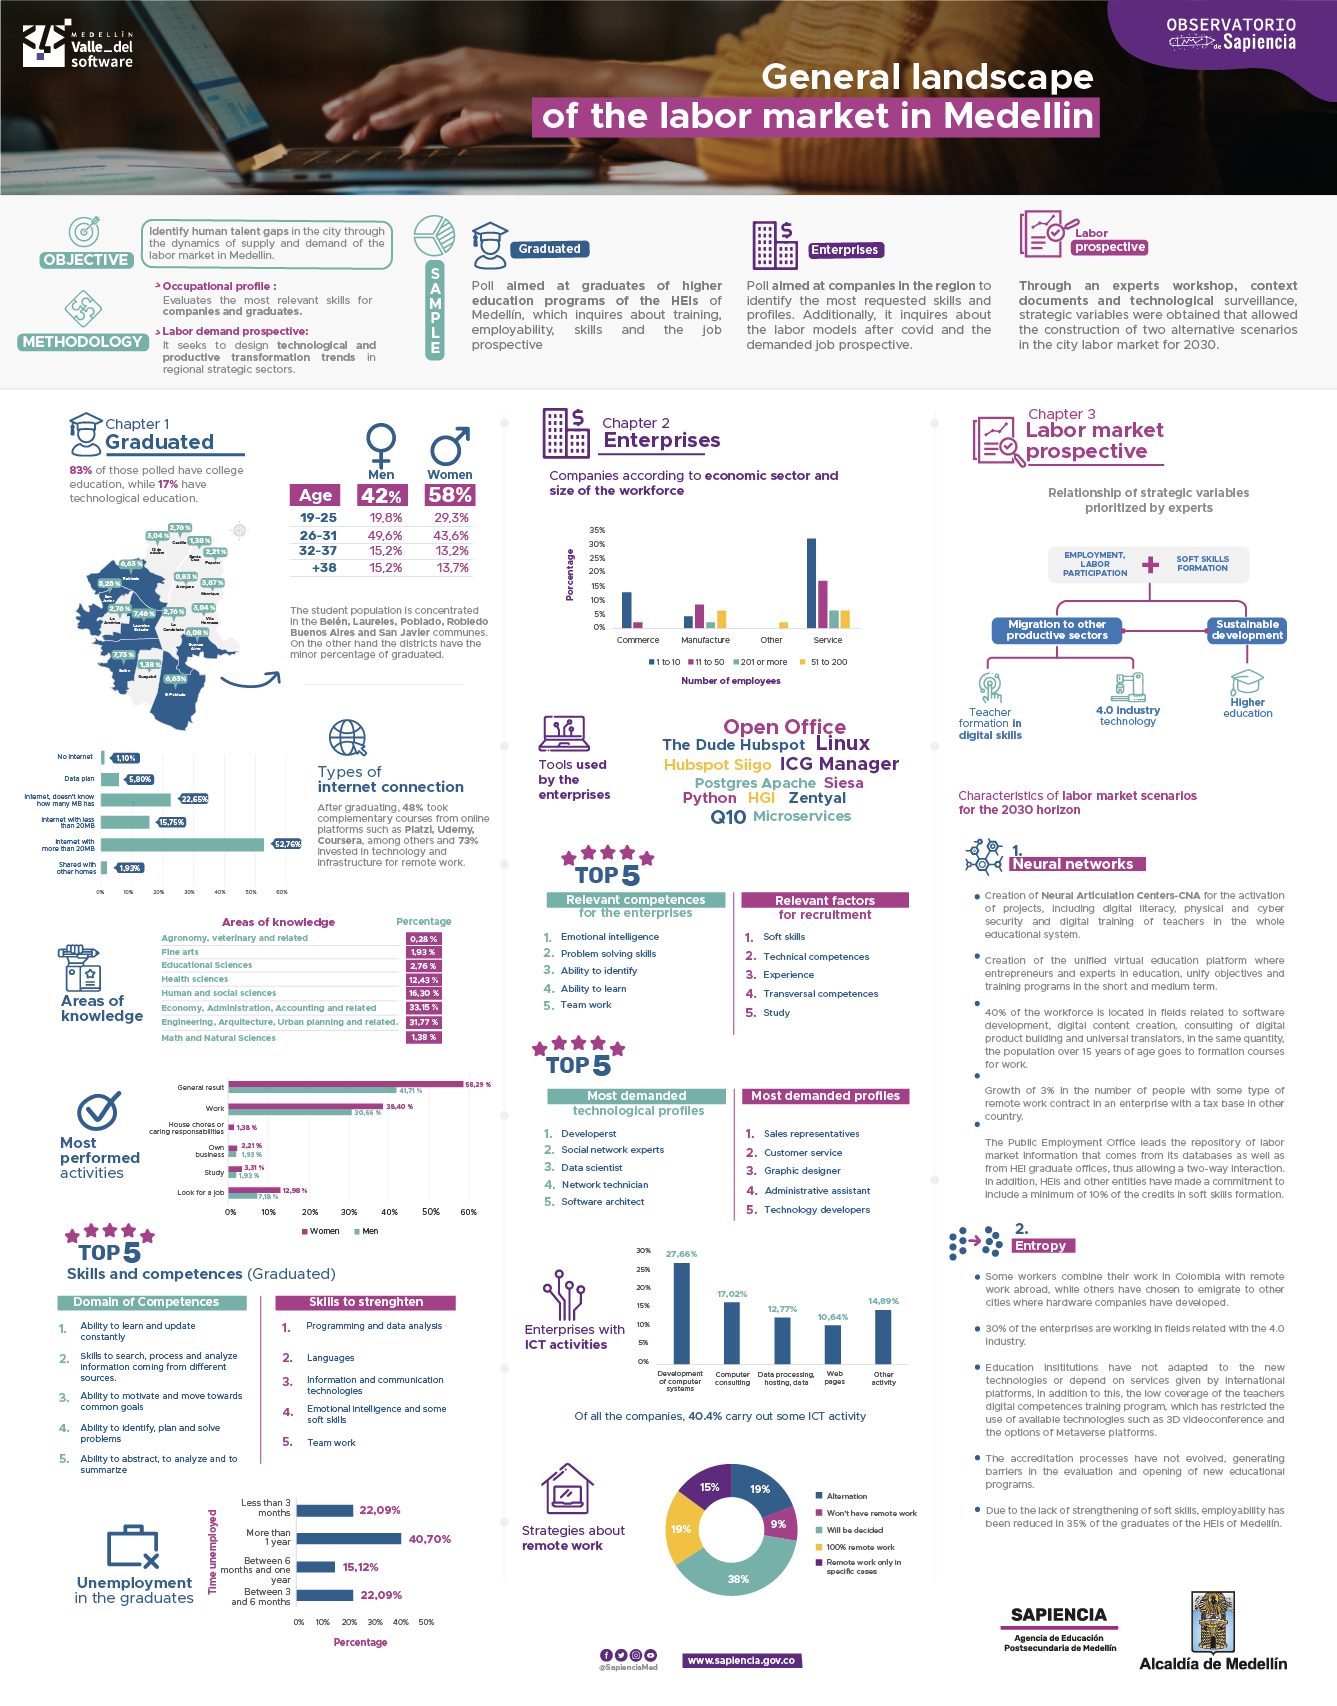 Infographic laboral market, image